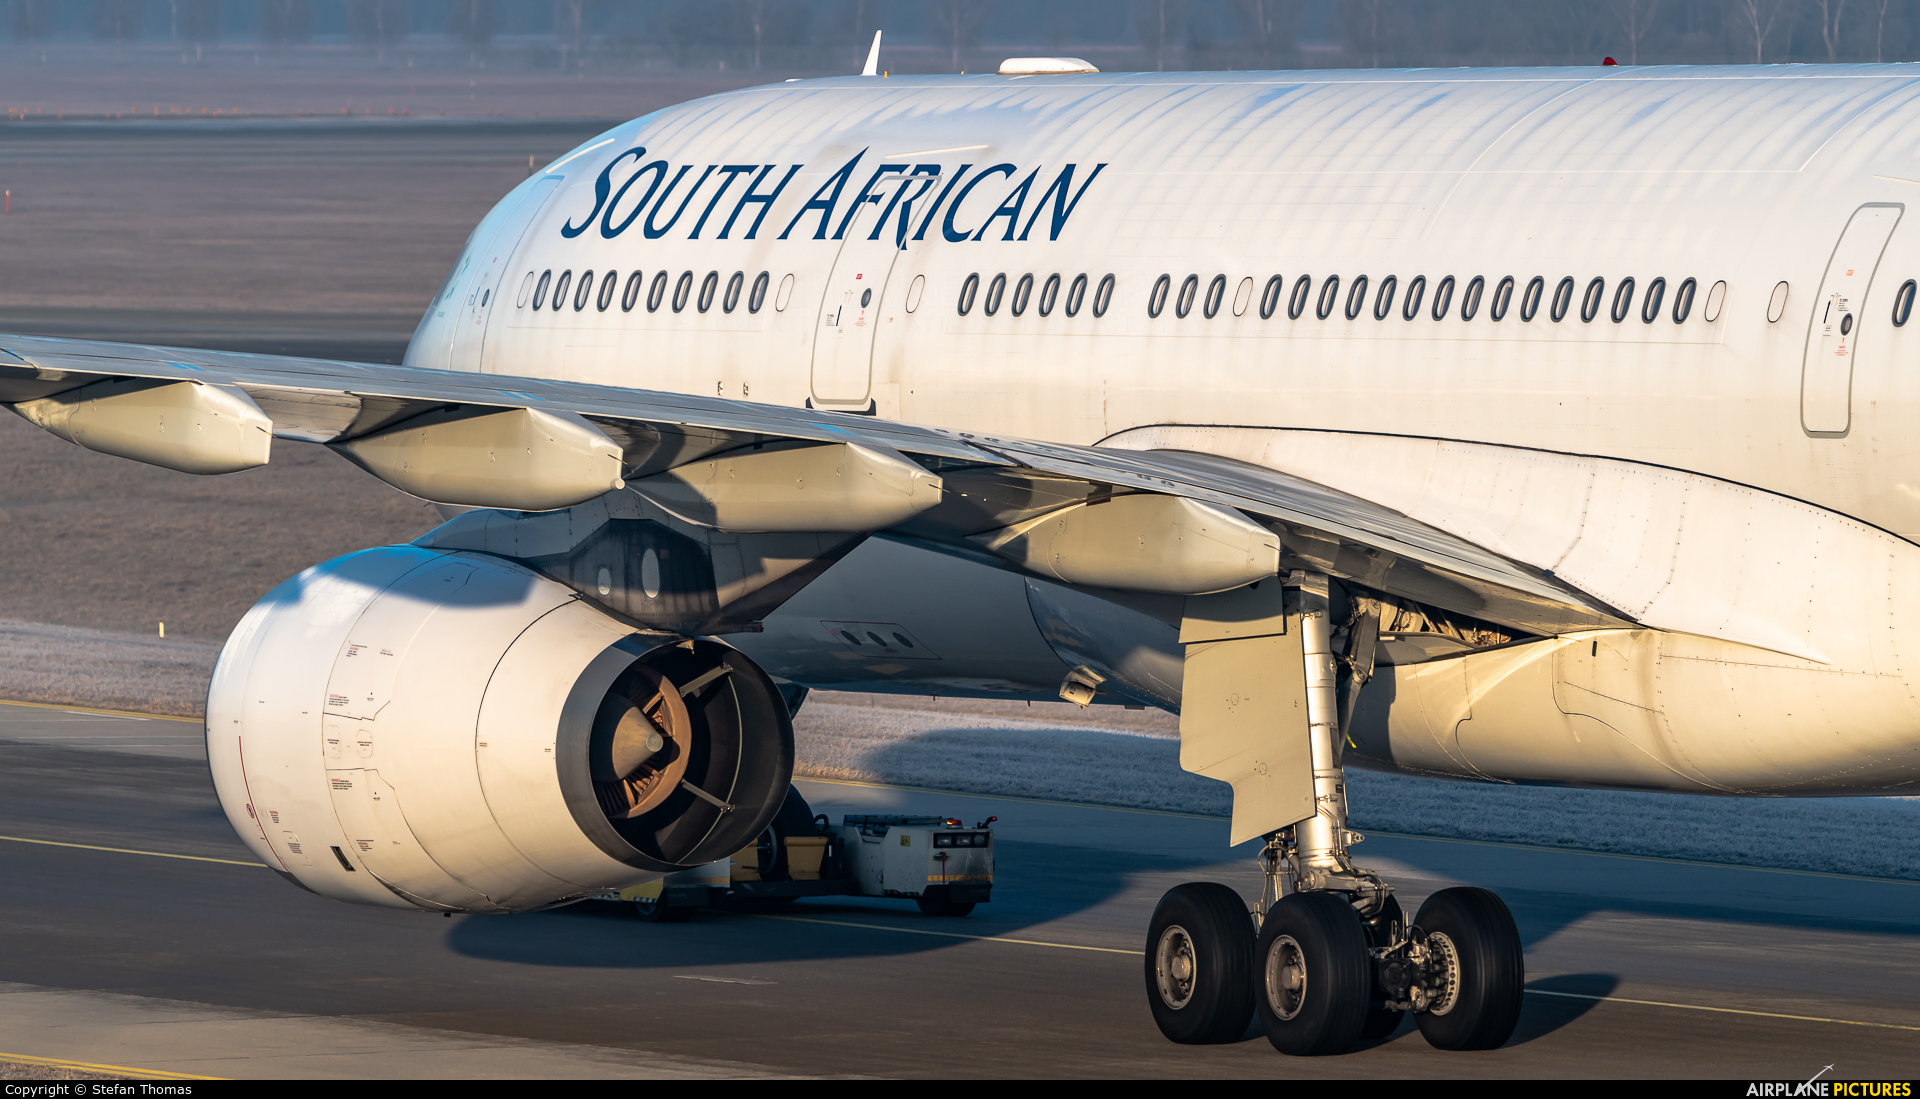 South African Airways ZS-SXU aircraft at Munich